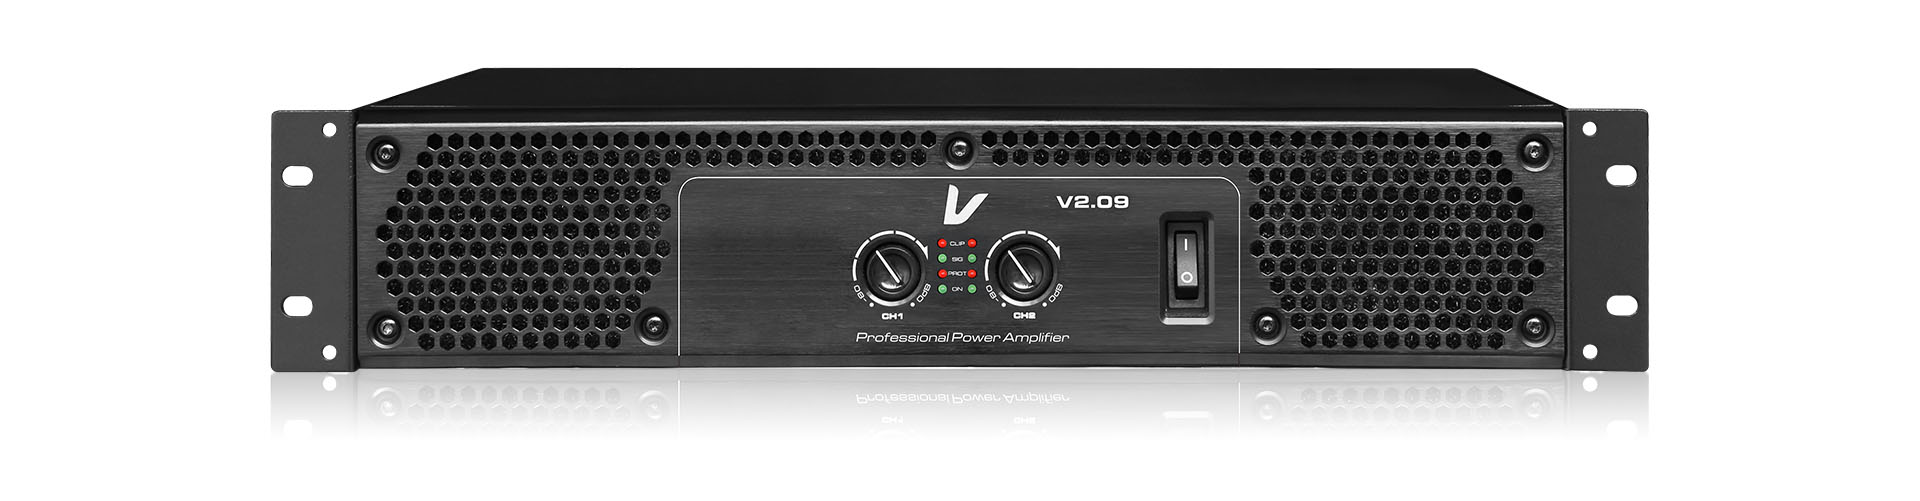 V4.25 power amplifier